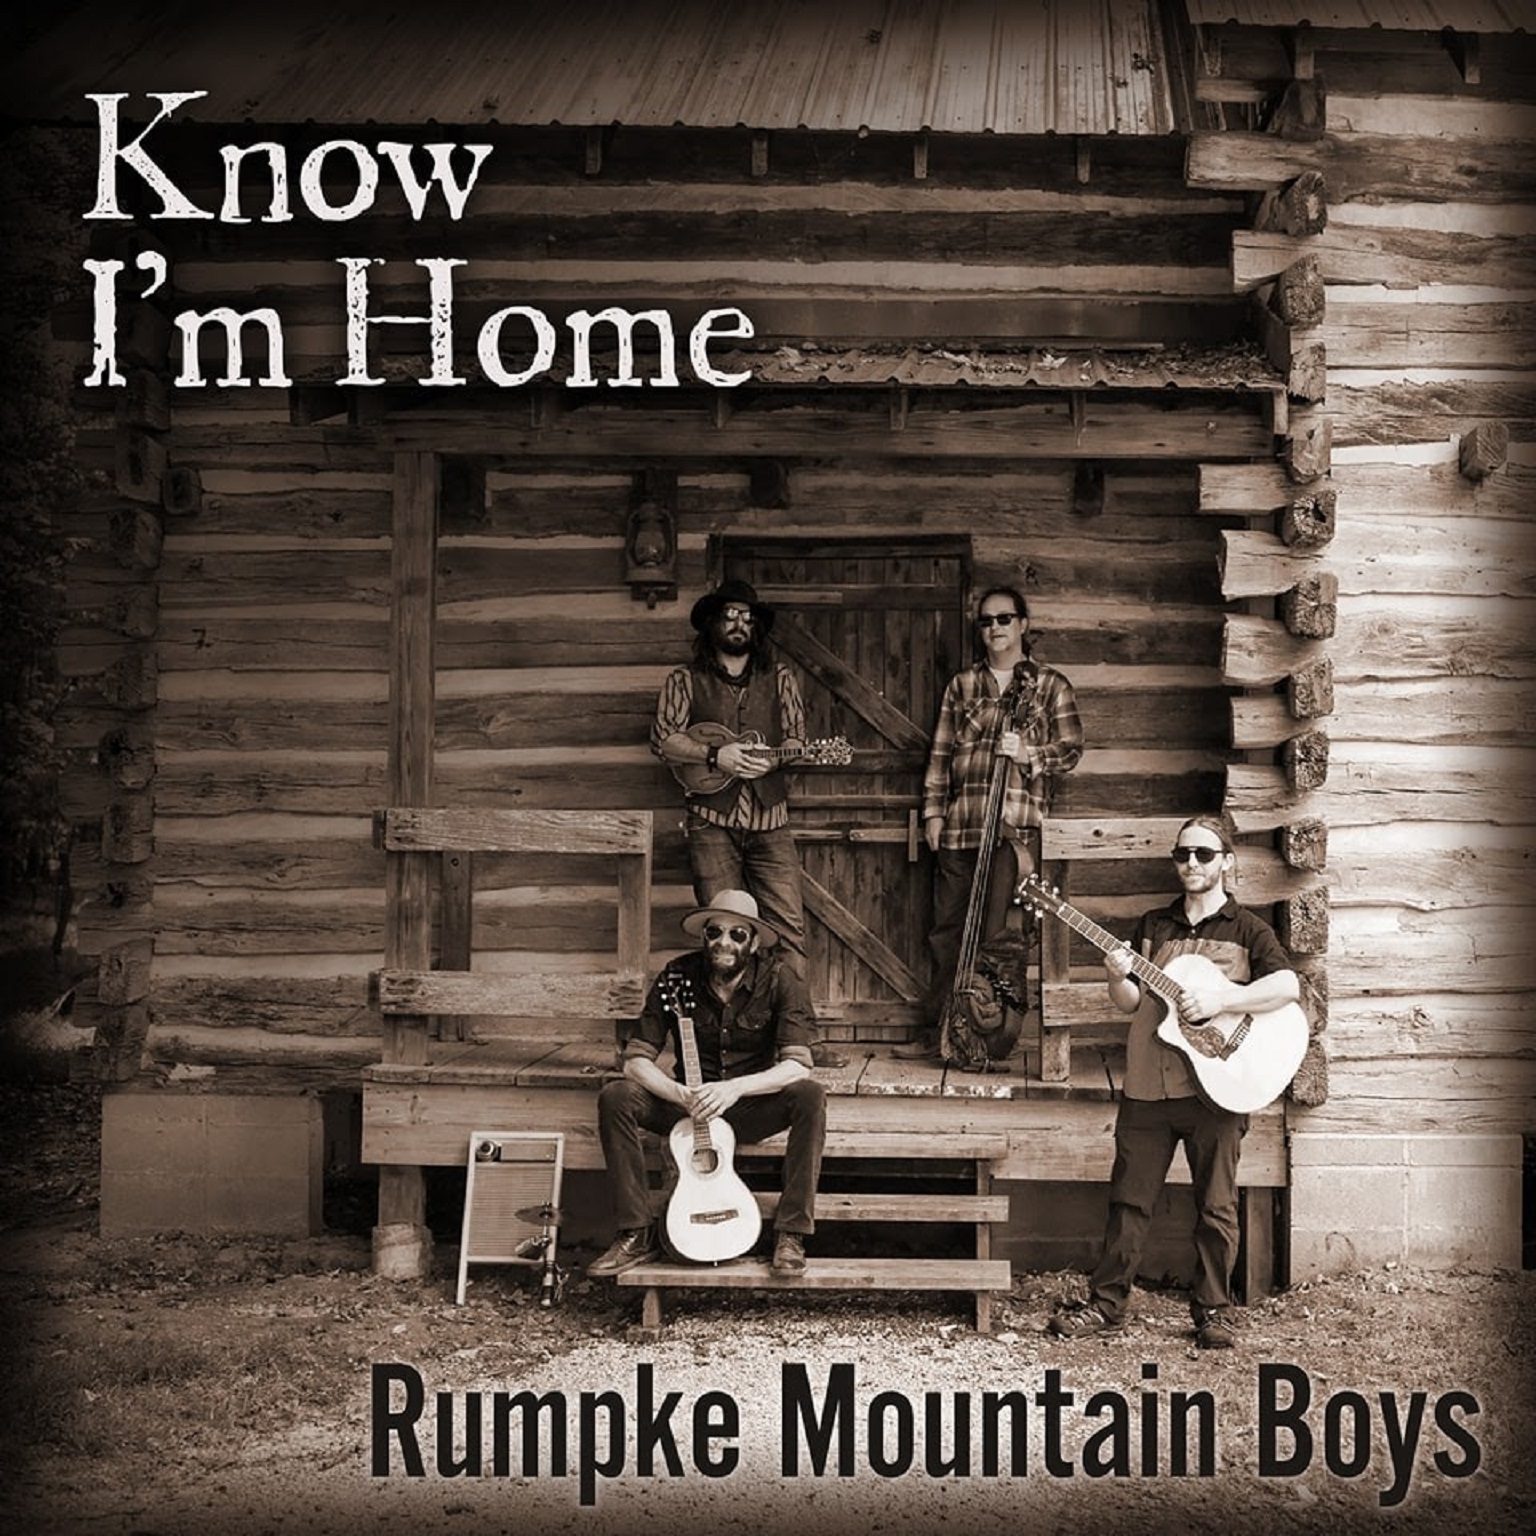 Rumpke Mountain Boys release new album, "Know I’m Home"